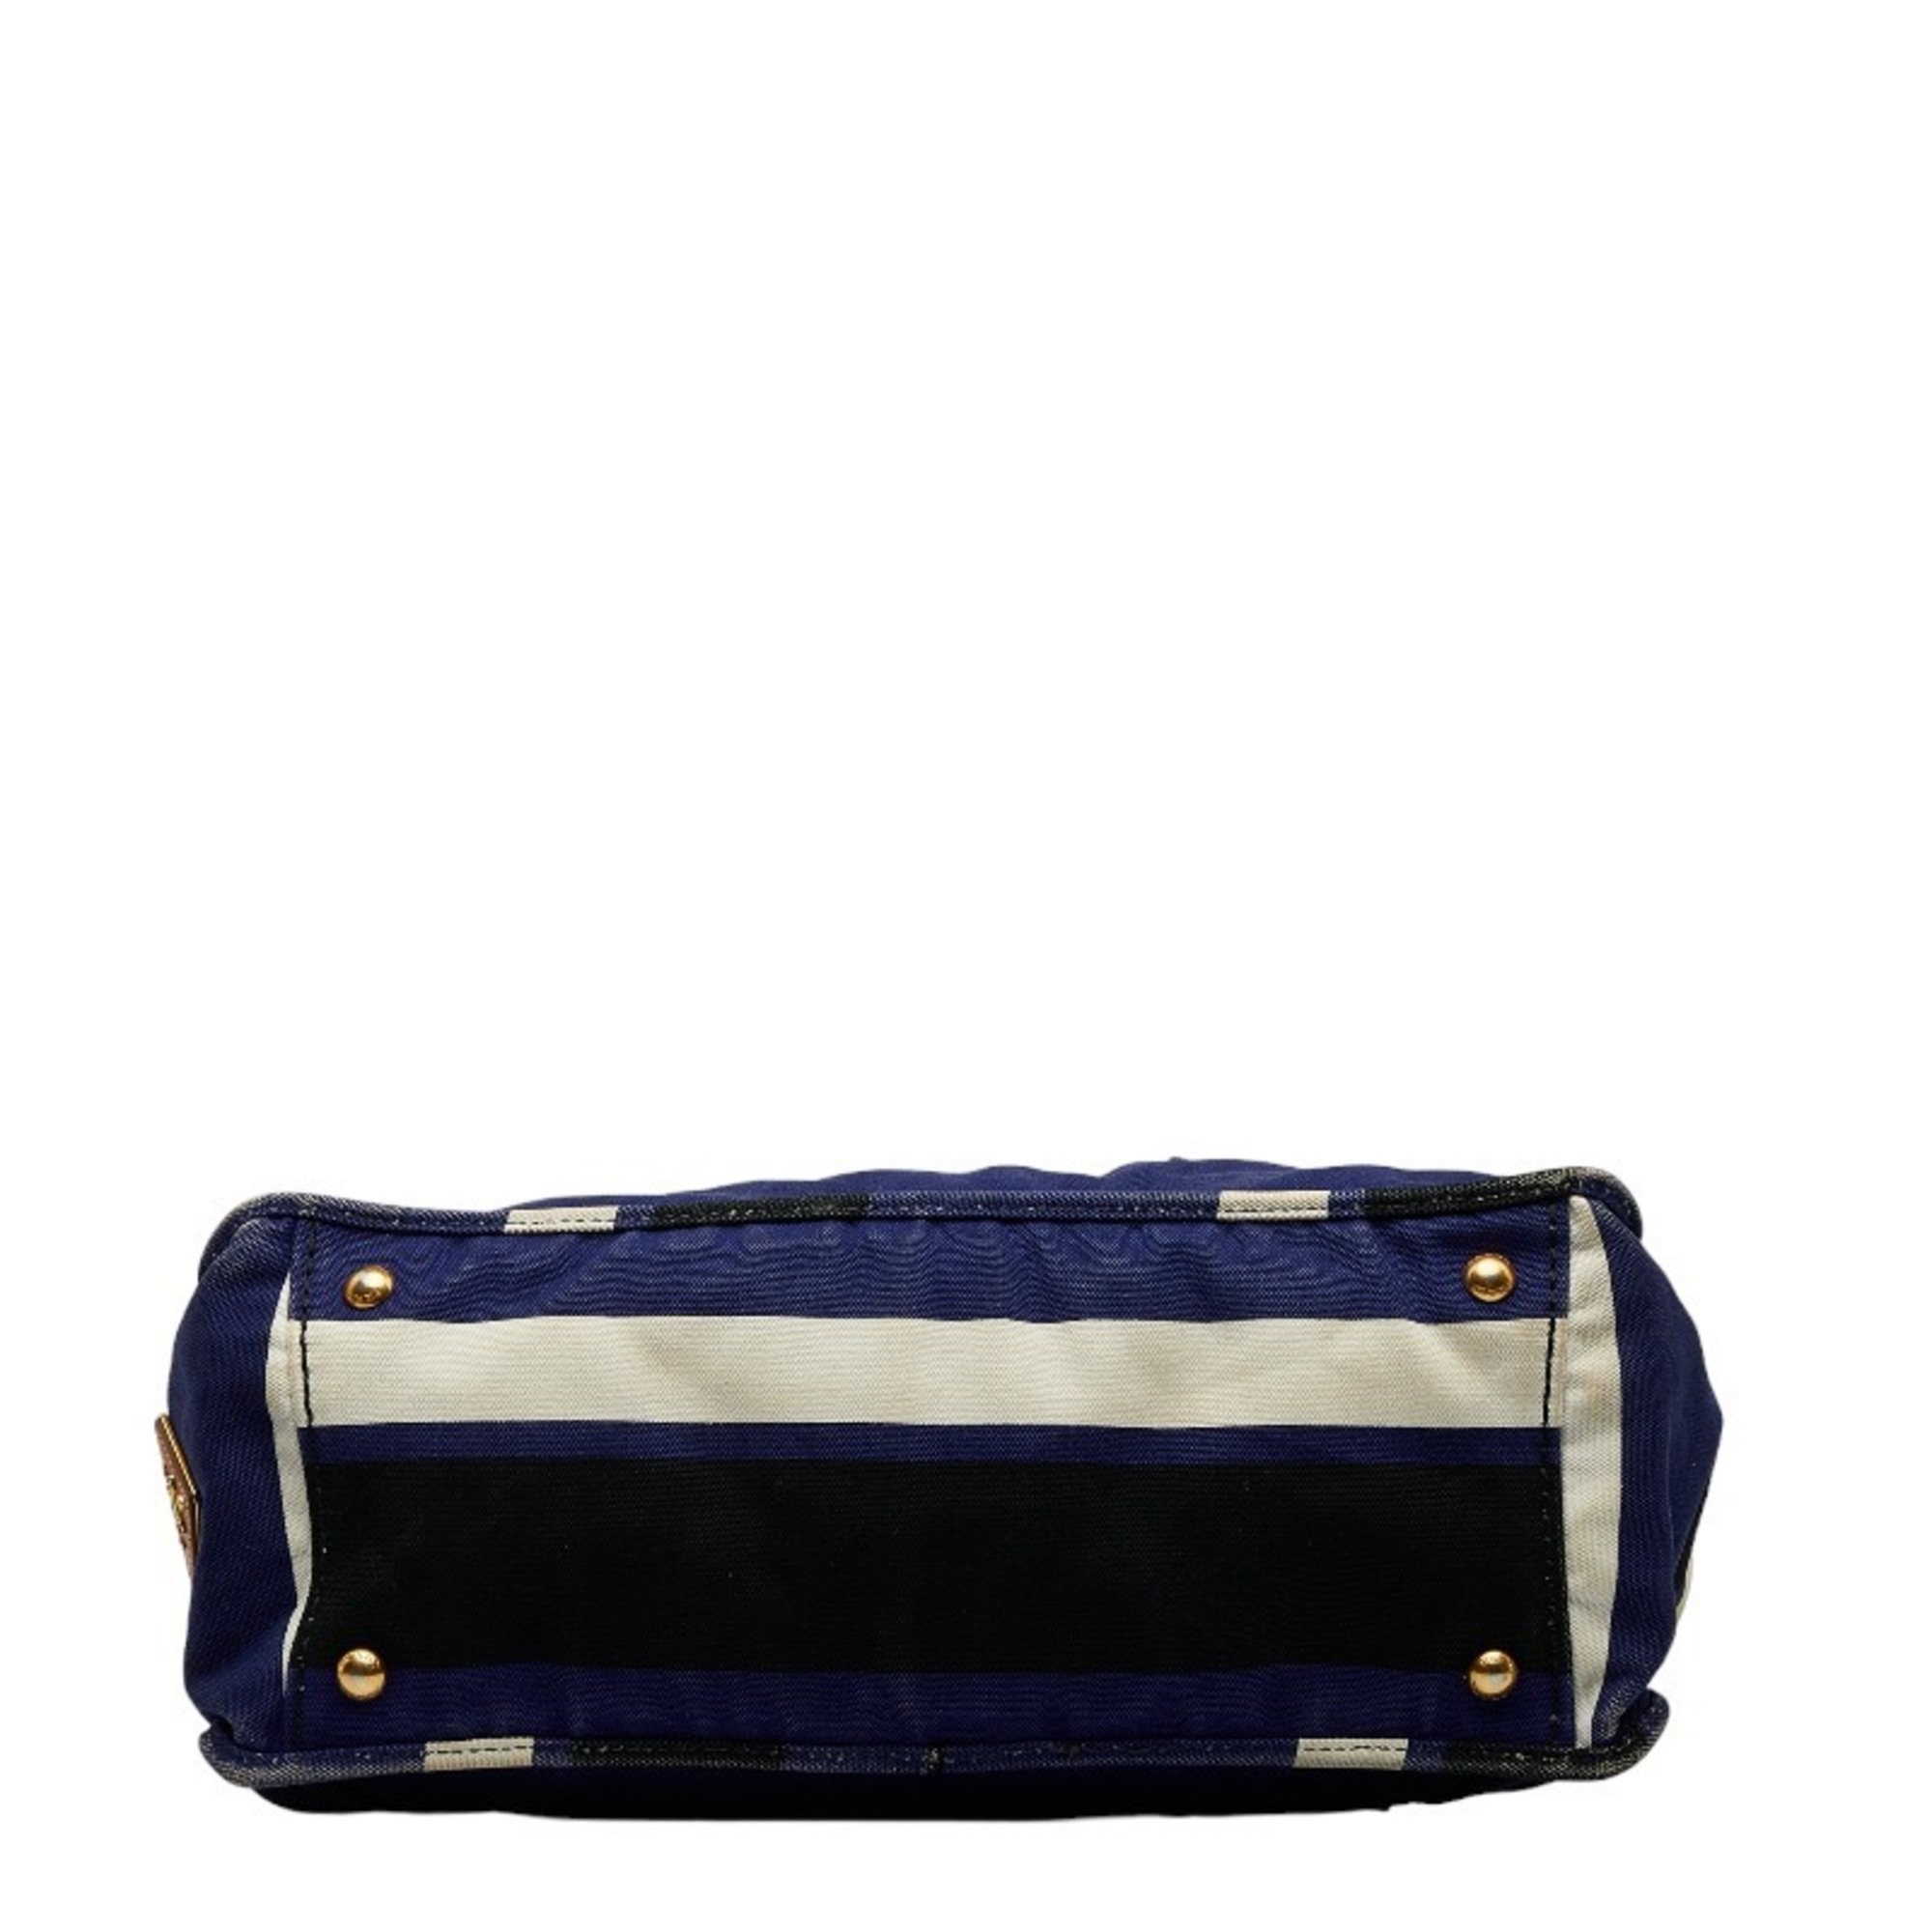 Prada Handbag Shoulder Bag Blue Multicolor Canvas Leather Women's PRADA